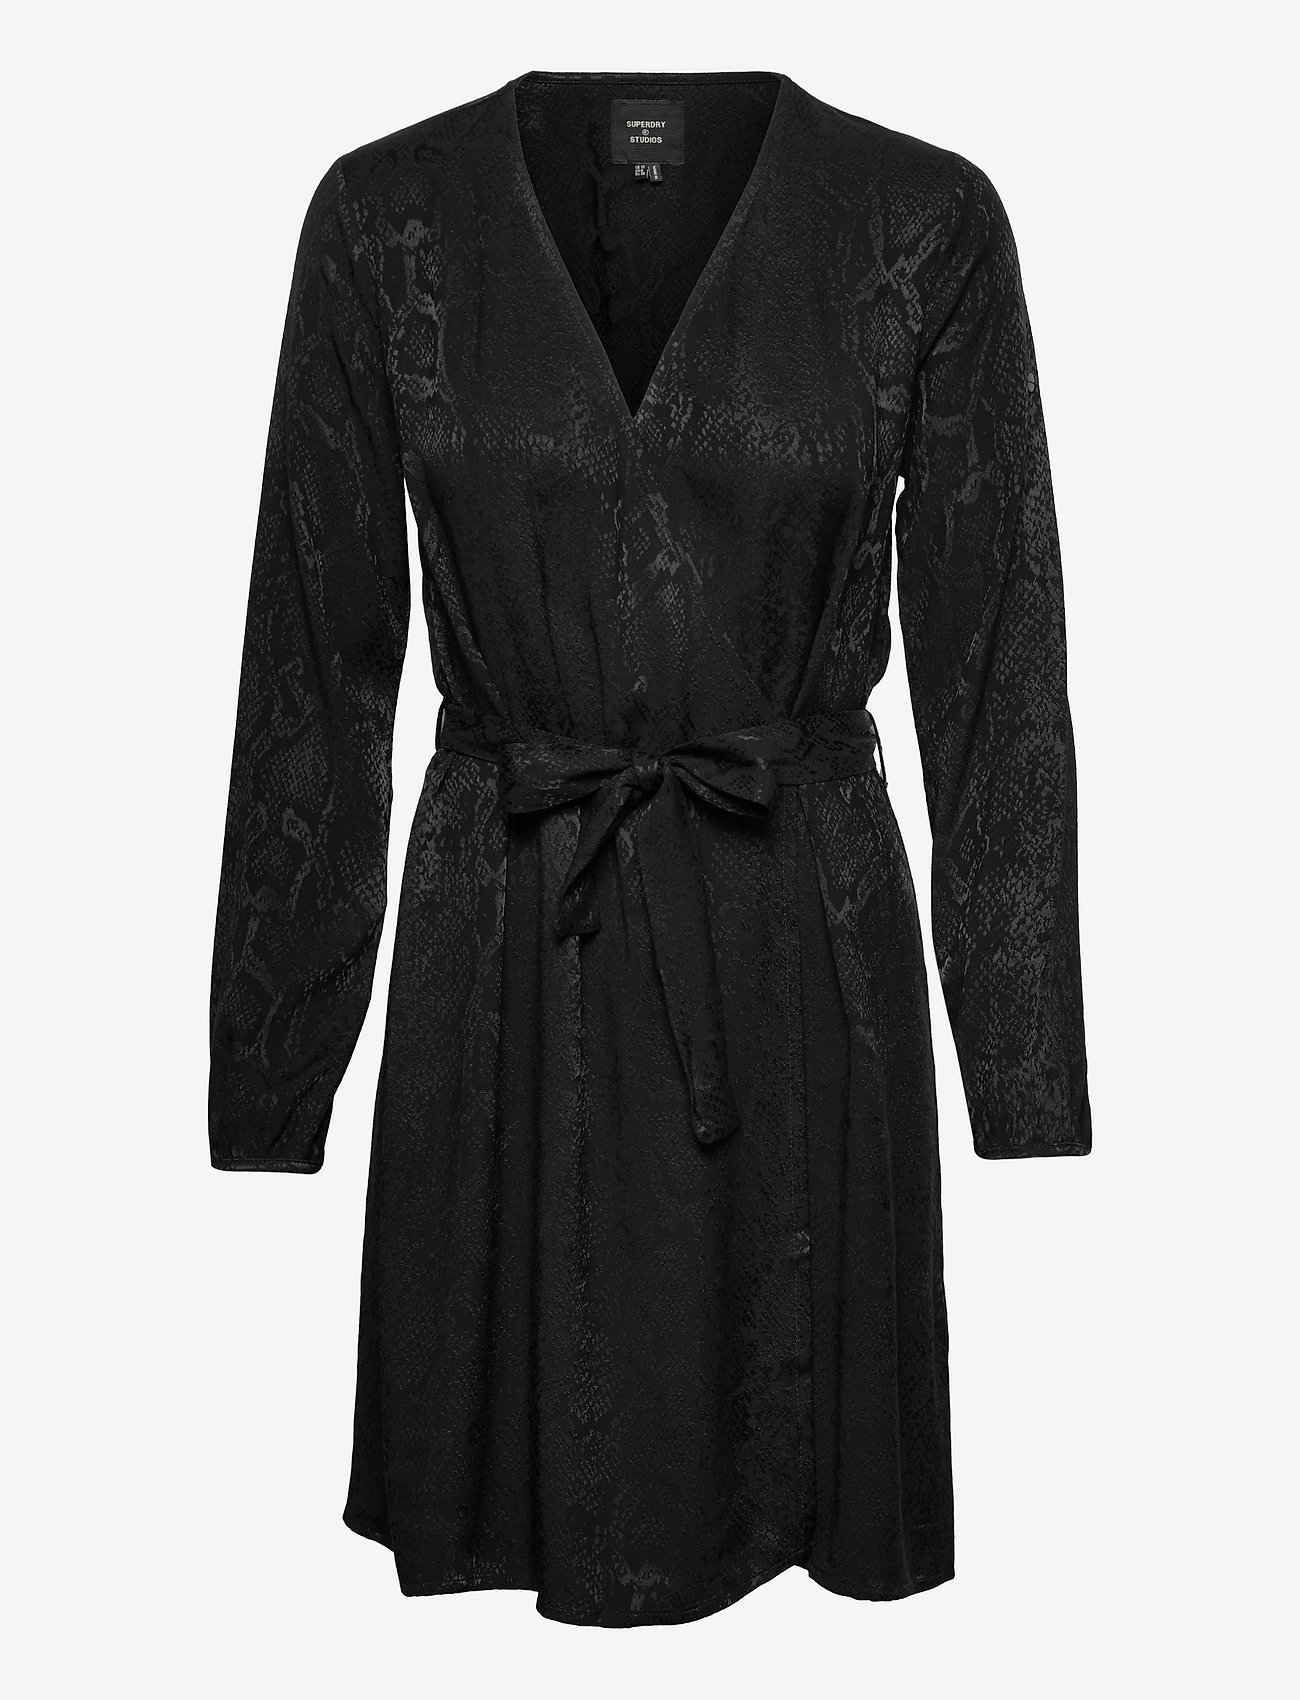 Superdry - STUDIOS JACQUARD WRAP DRESS - wrap dresses - black - 0